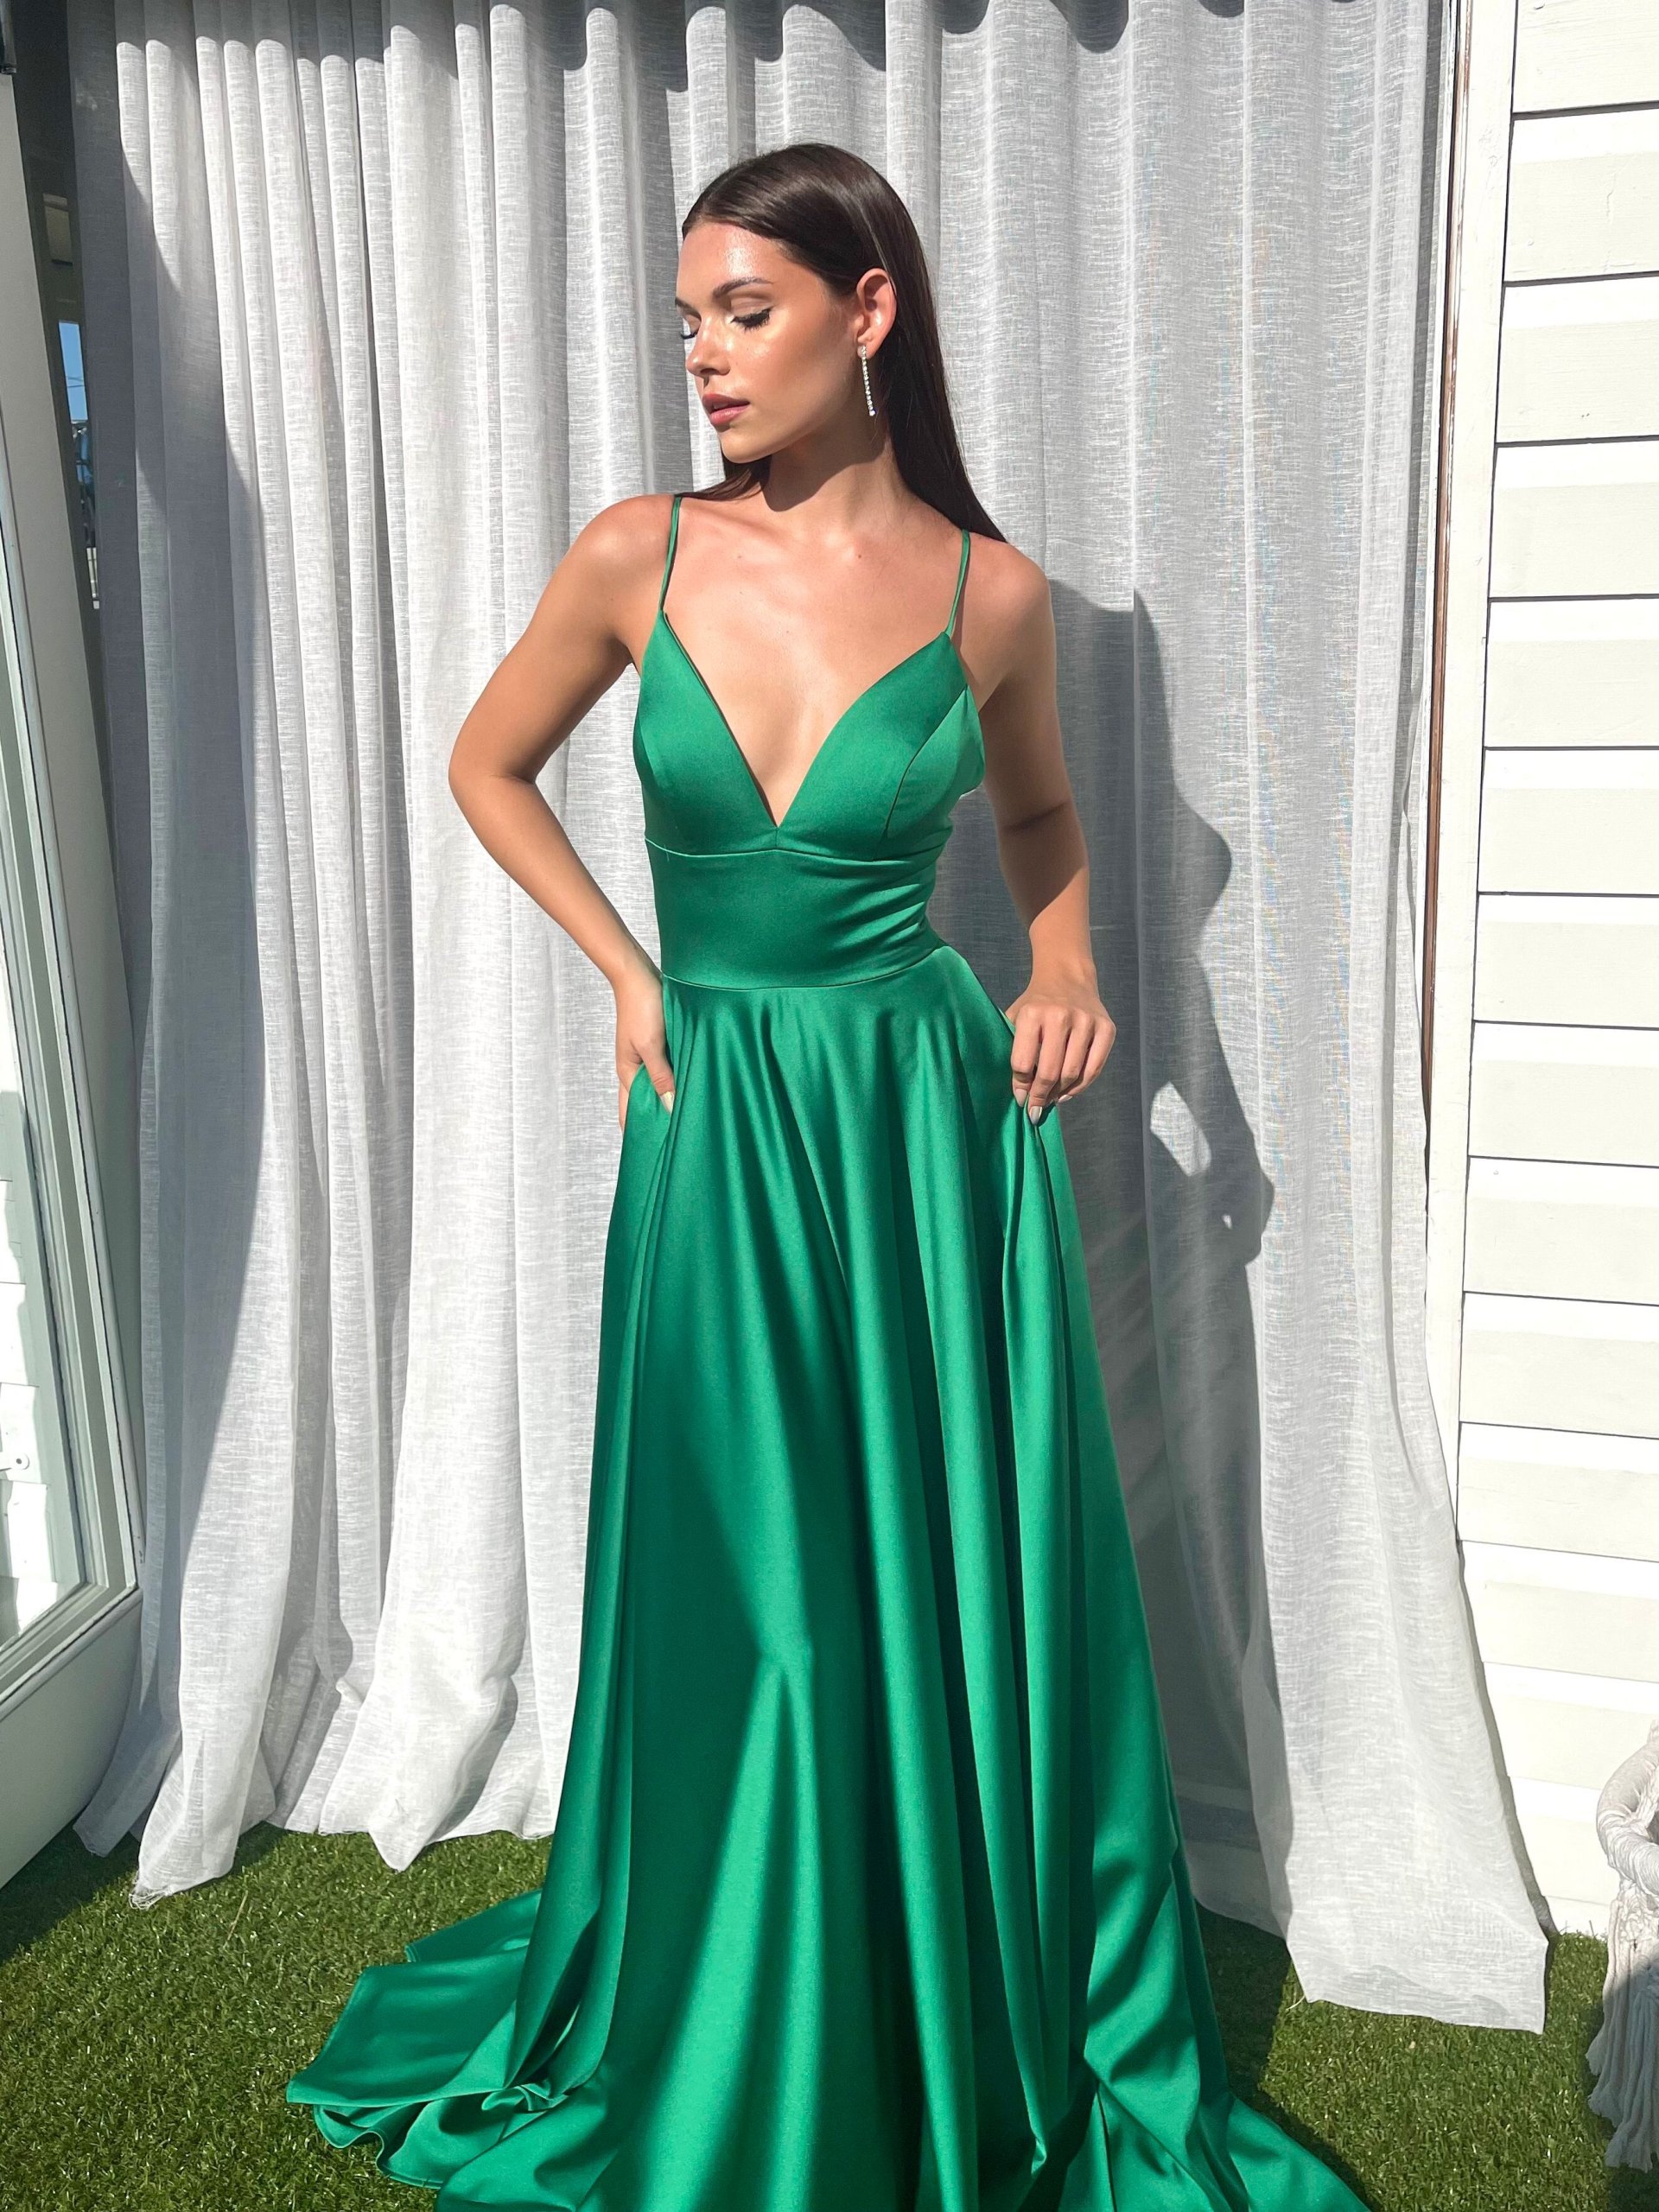 V|neck Ball Gown Prom Dress Blush 5882 | Promheadquarters.com